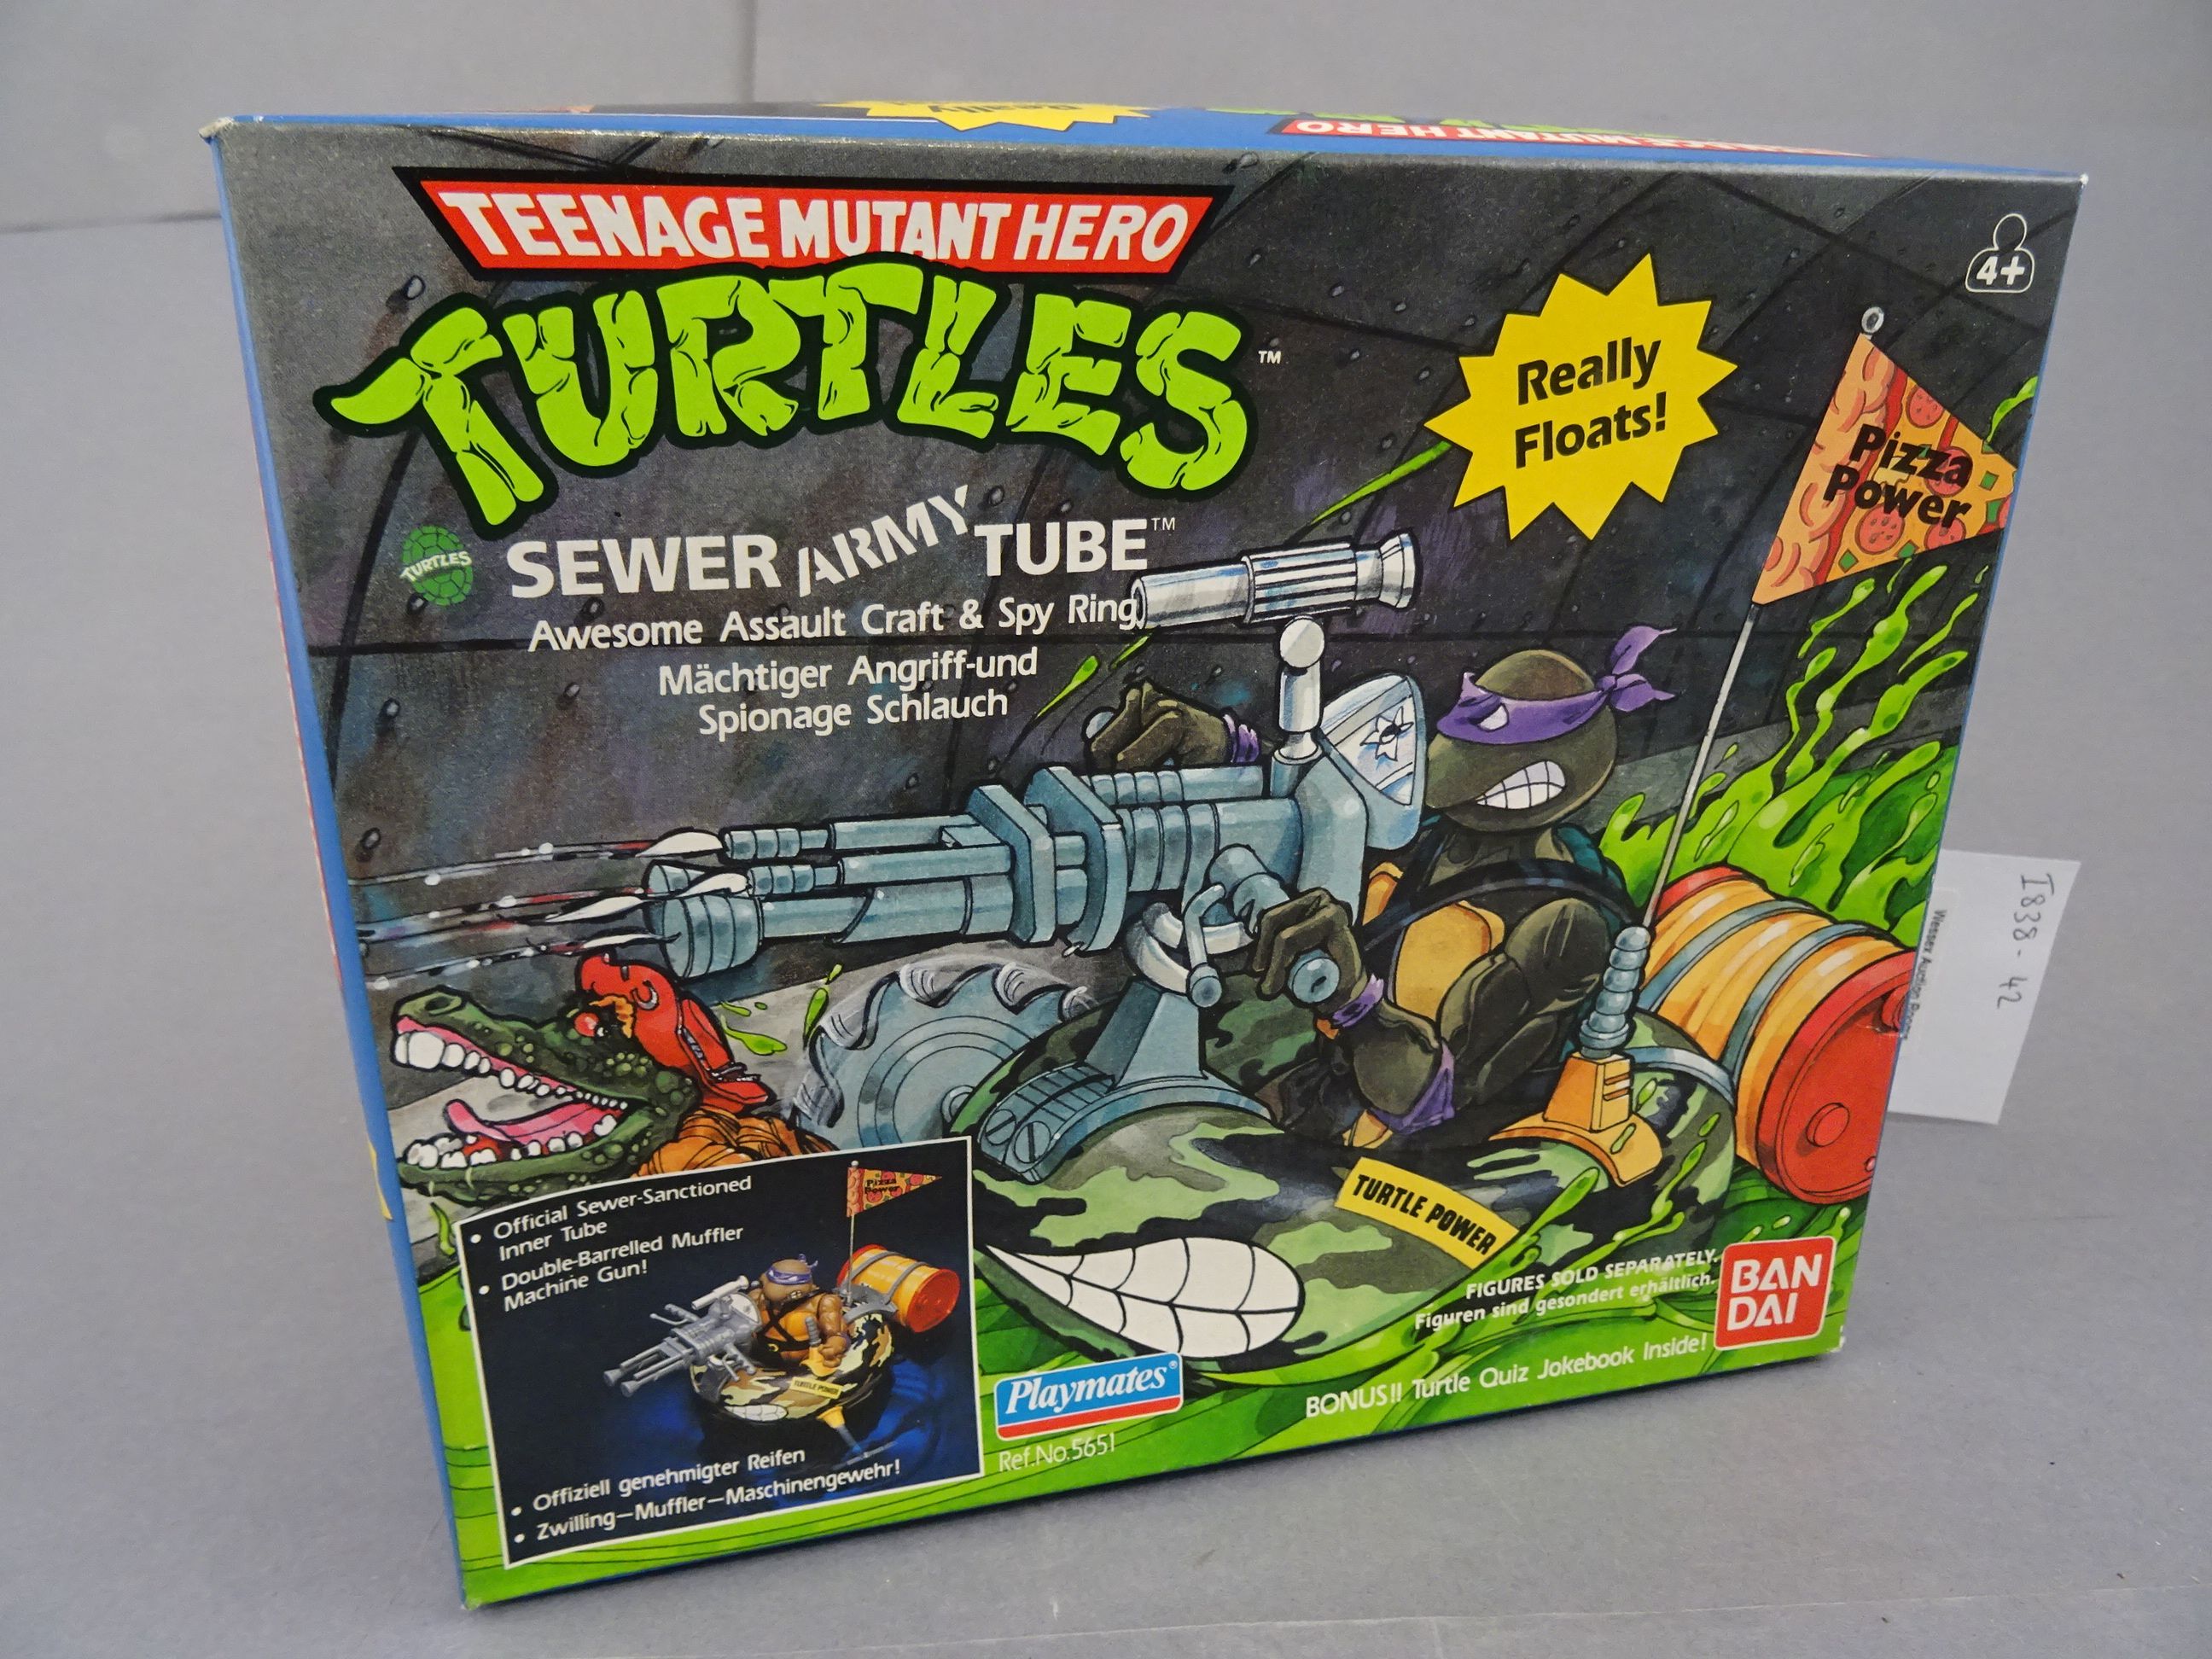 Original boxed Playmates Bandai Teenage Mutant Hero Turtles Sewer Army Tube vehicle appearing sealed